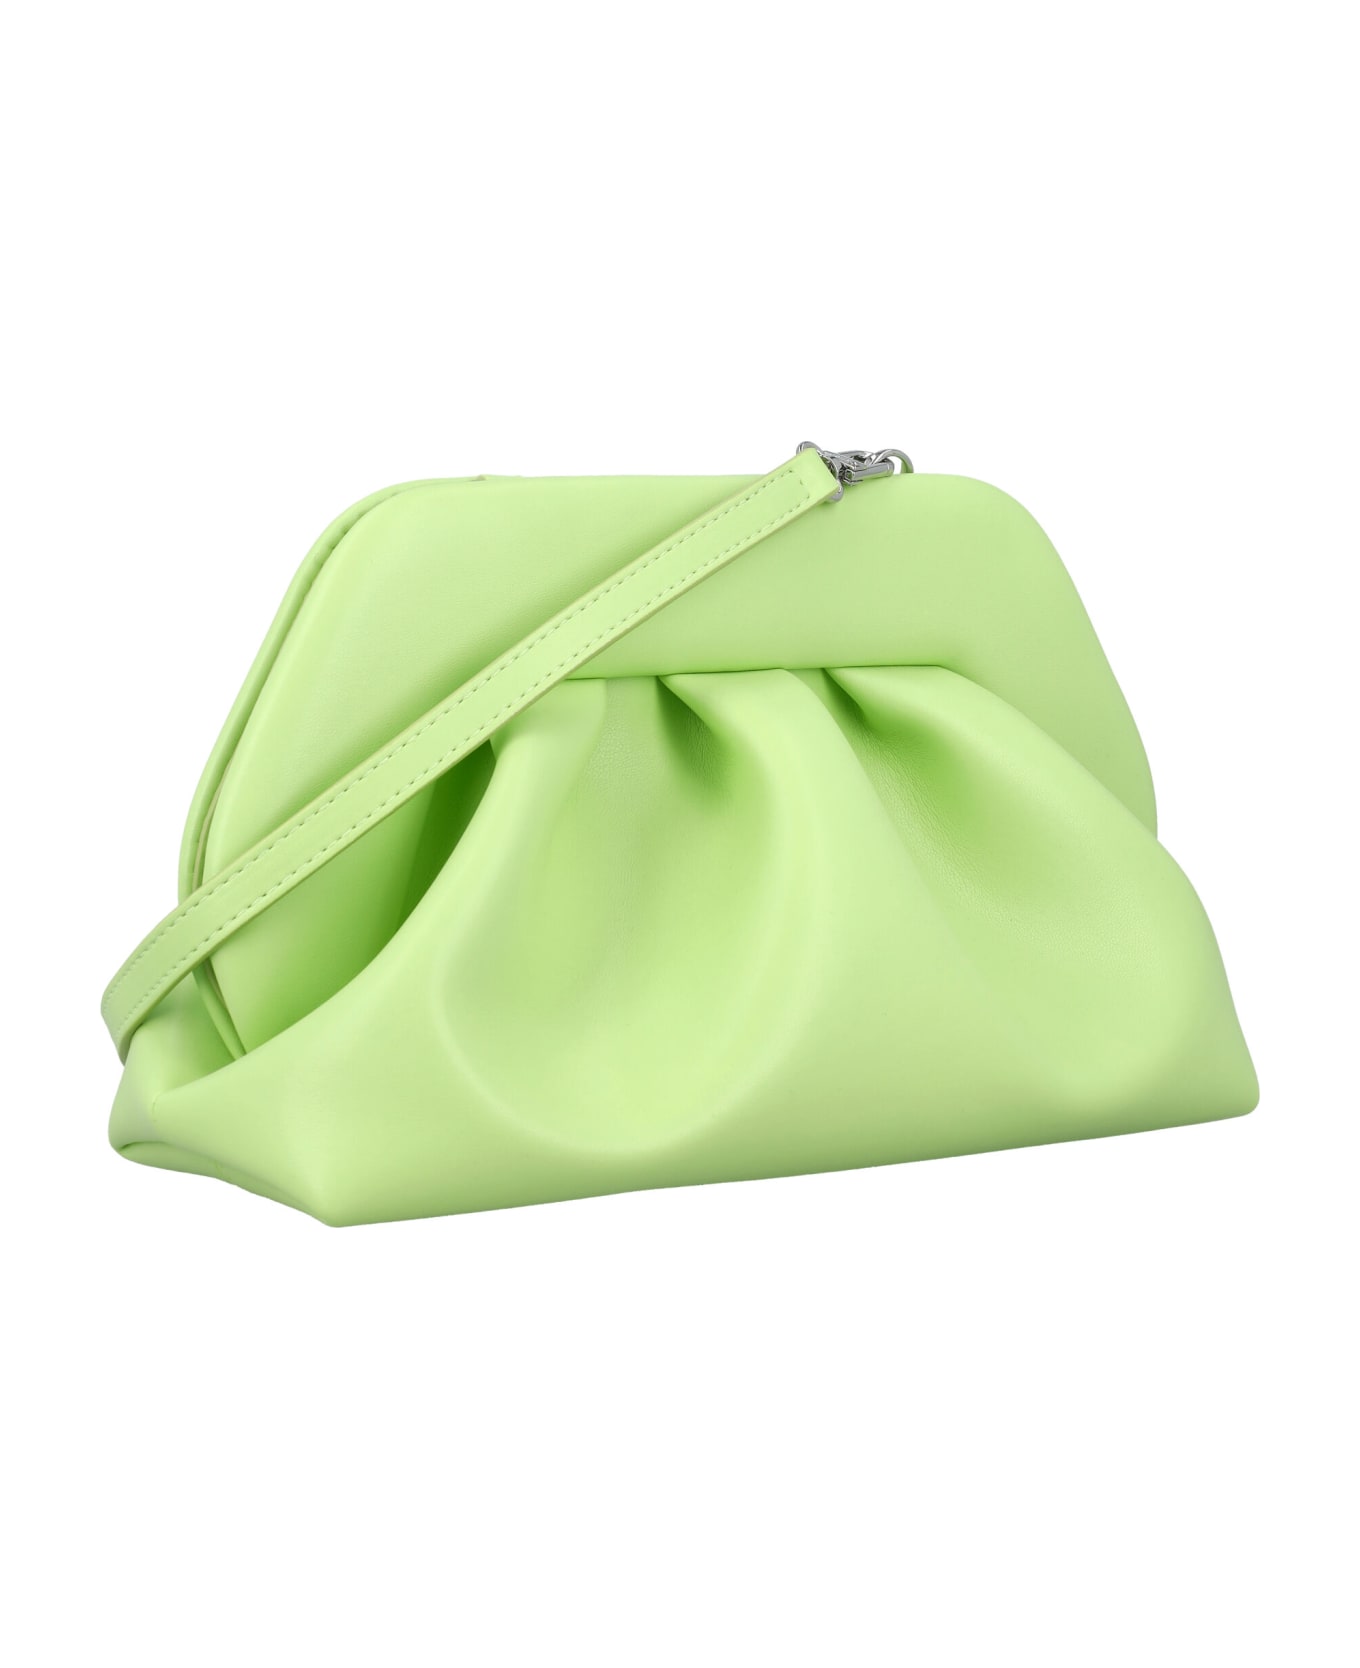 THEMOIRè Tia Vegan Fabric Clutch - FOLIAGE ACID GREEN クラッチバッグ